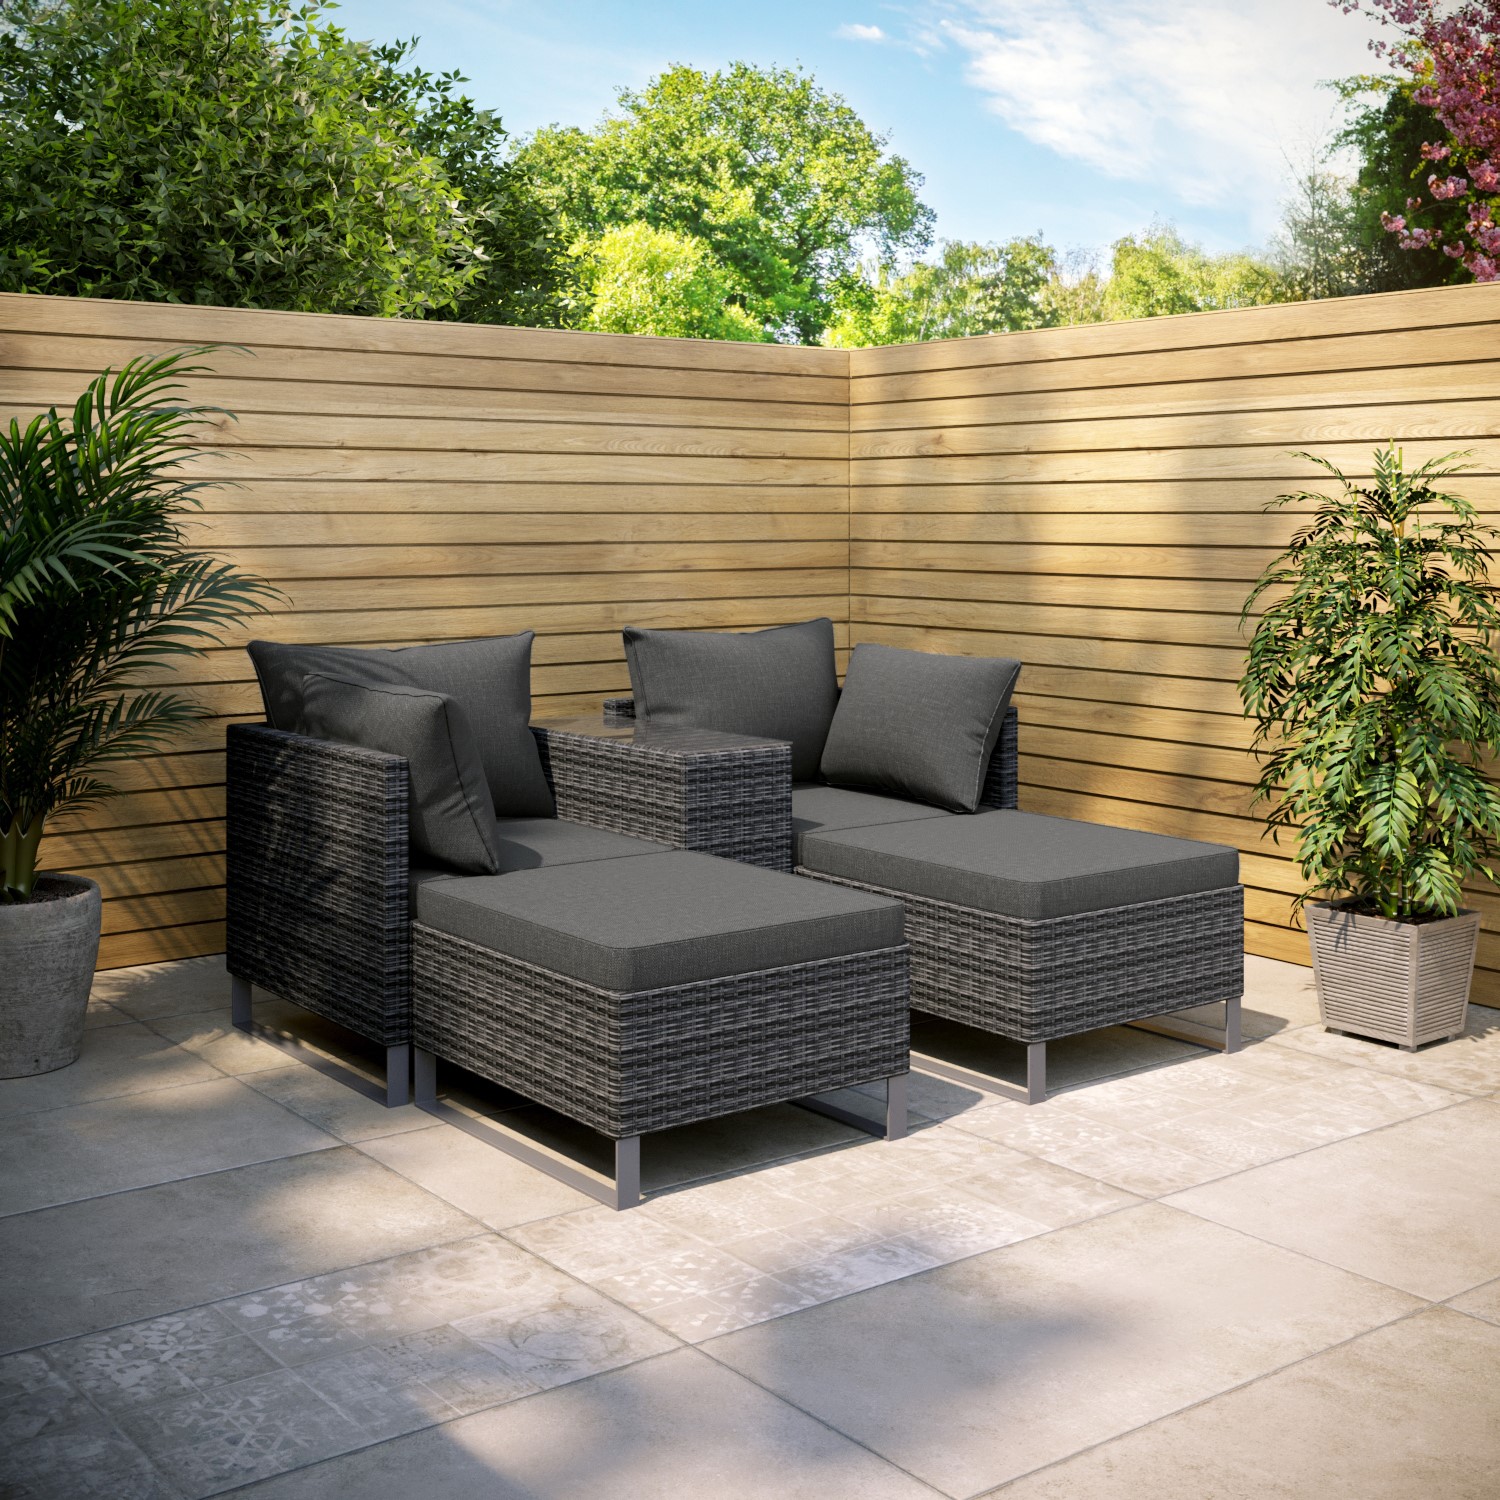 Grey Modular 2 Seater Rattan Sofa Footstools And Table Set Como Outdoor Furniture123